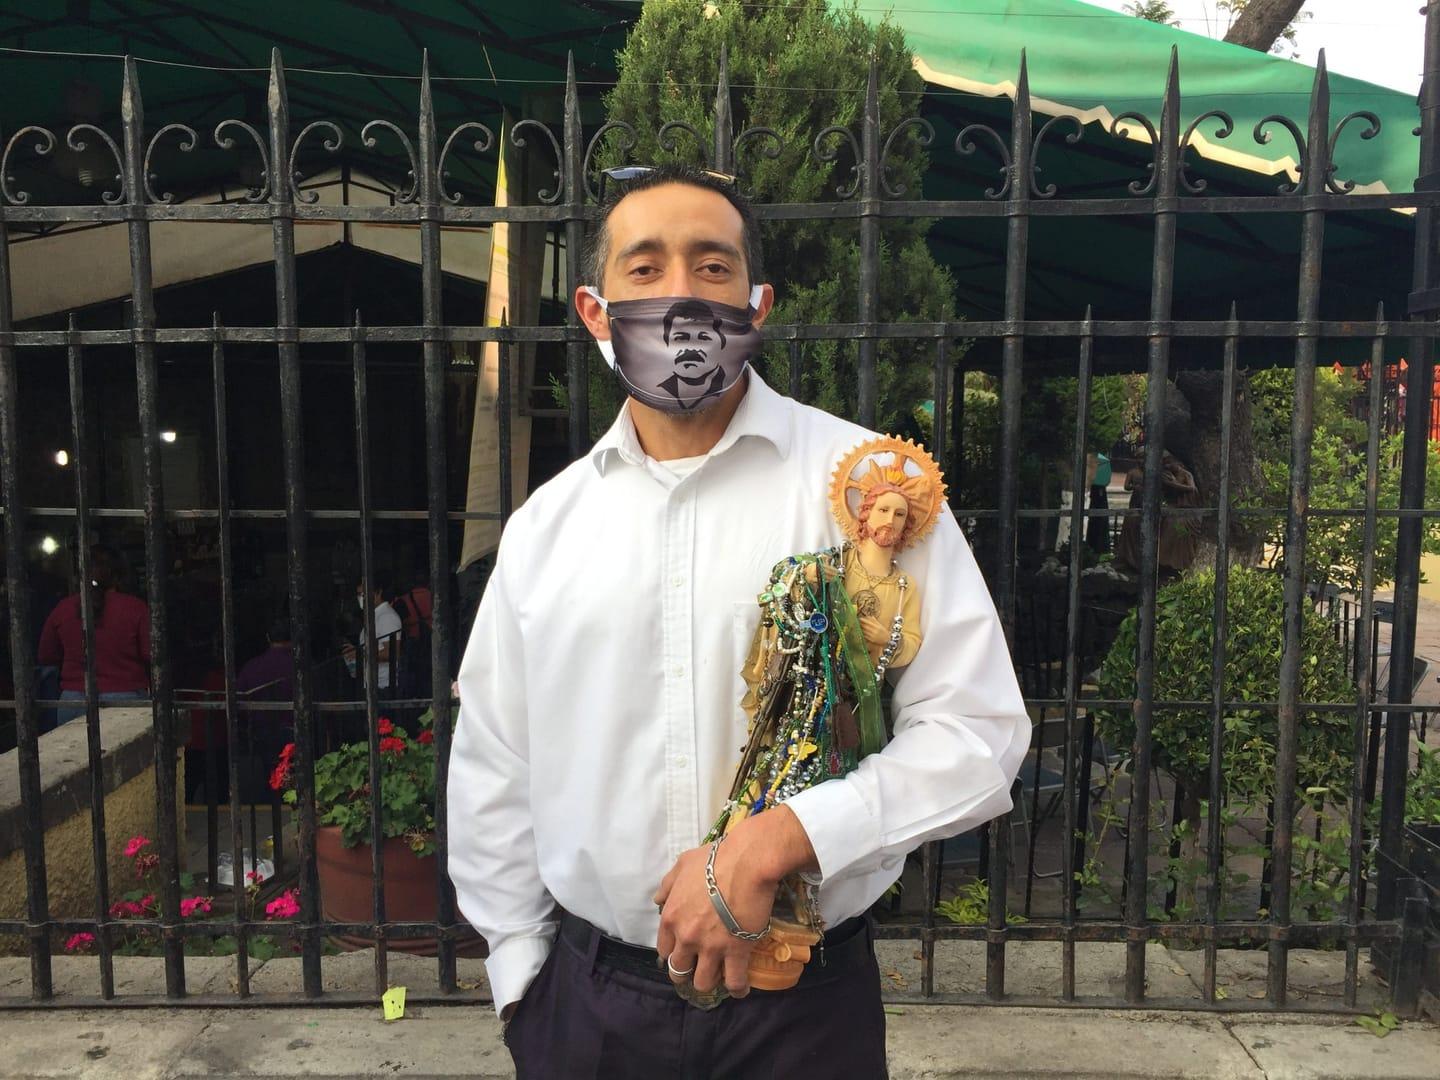 St. Jude Thaddeus draws immense devotion from Mexico’s downtrodden